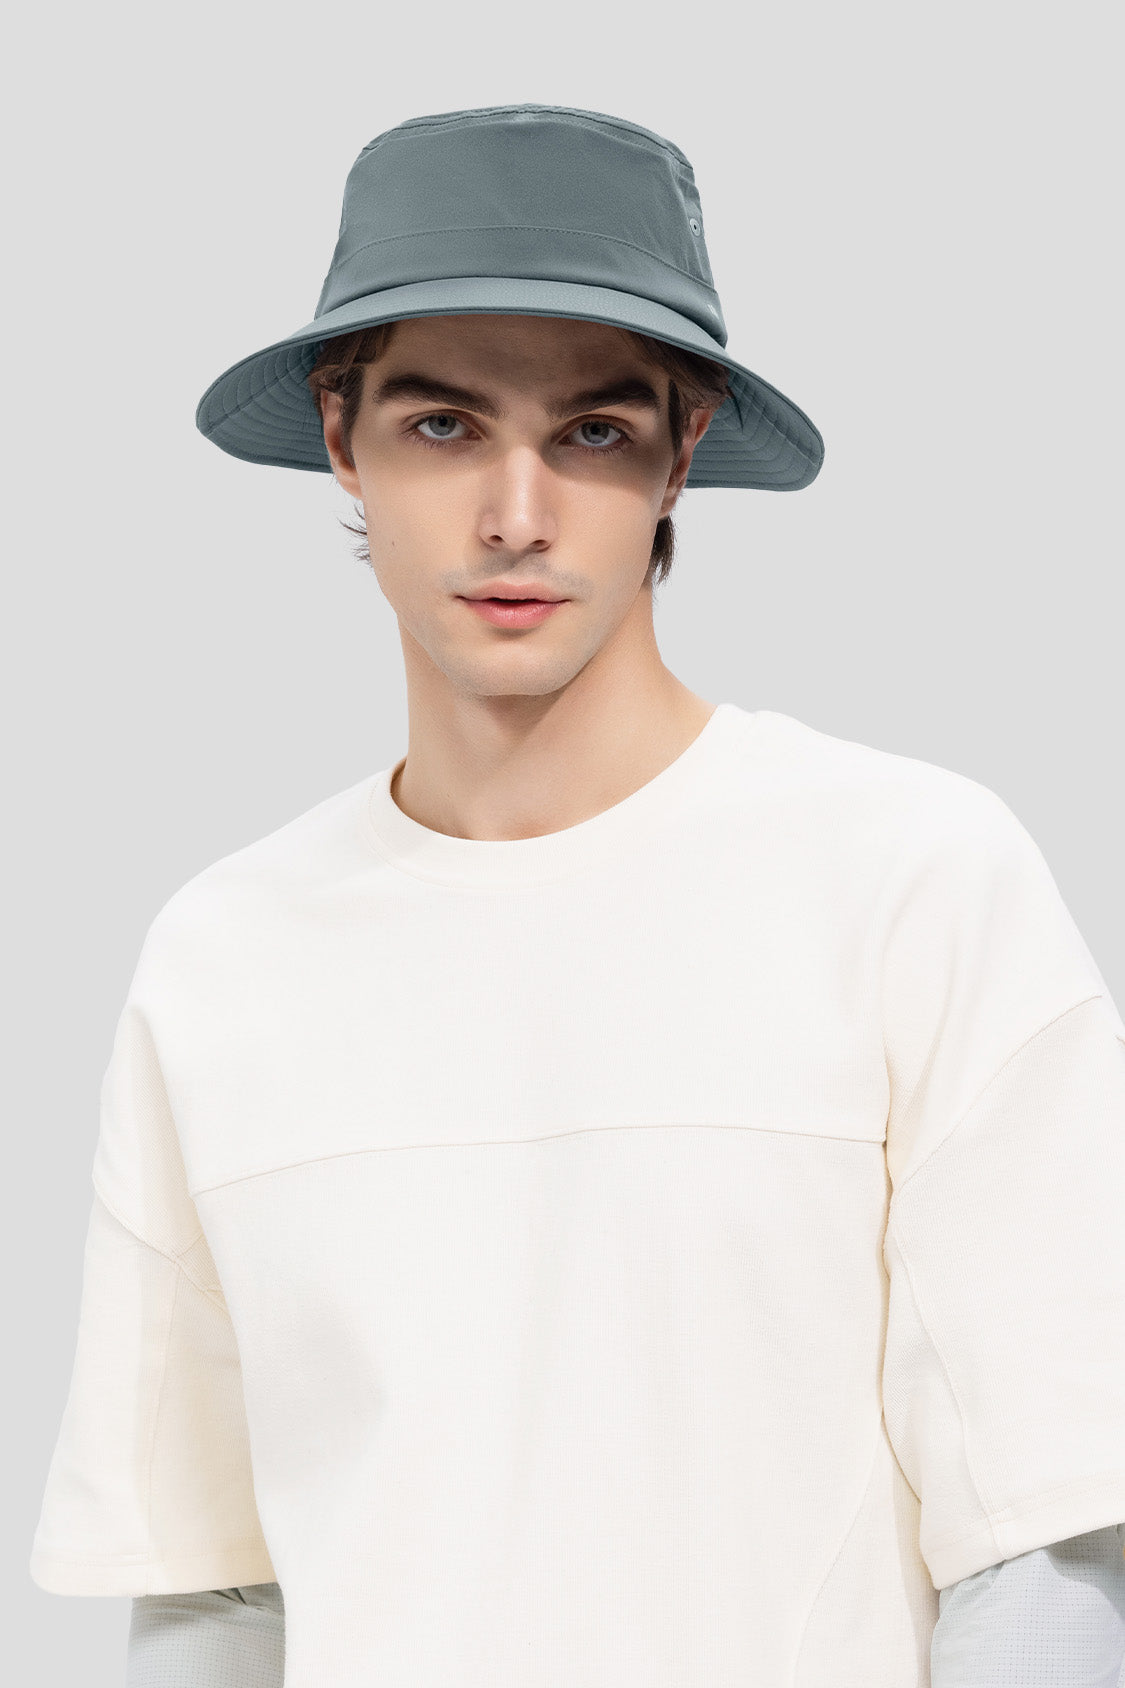 beneunder men's sun hats #color_deep blue gray